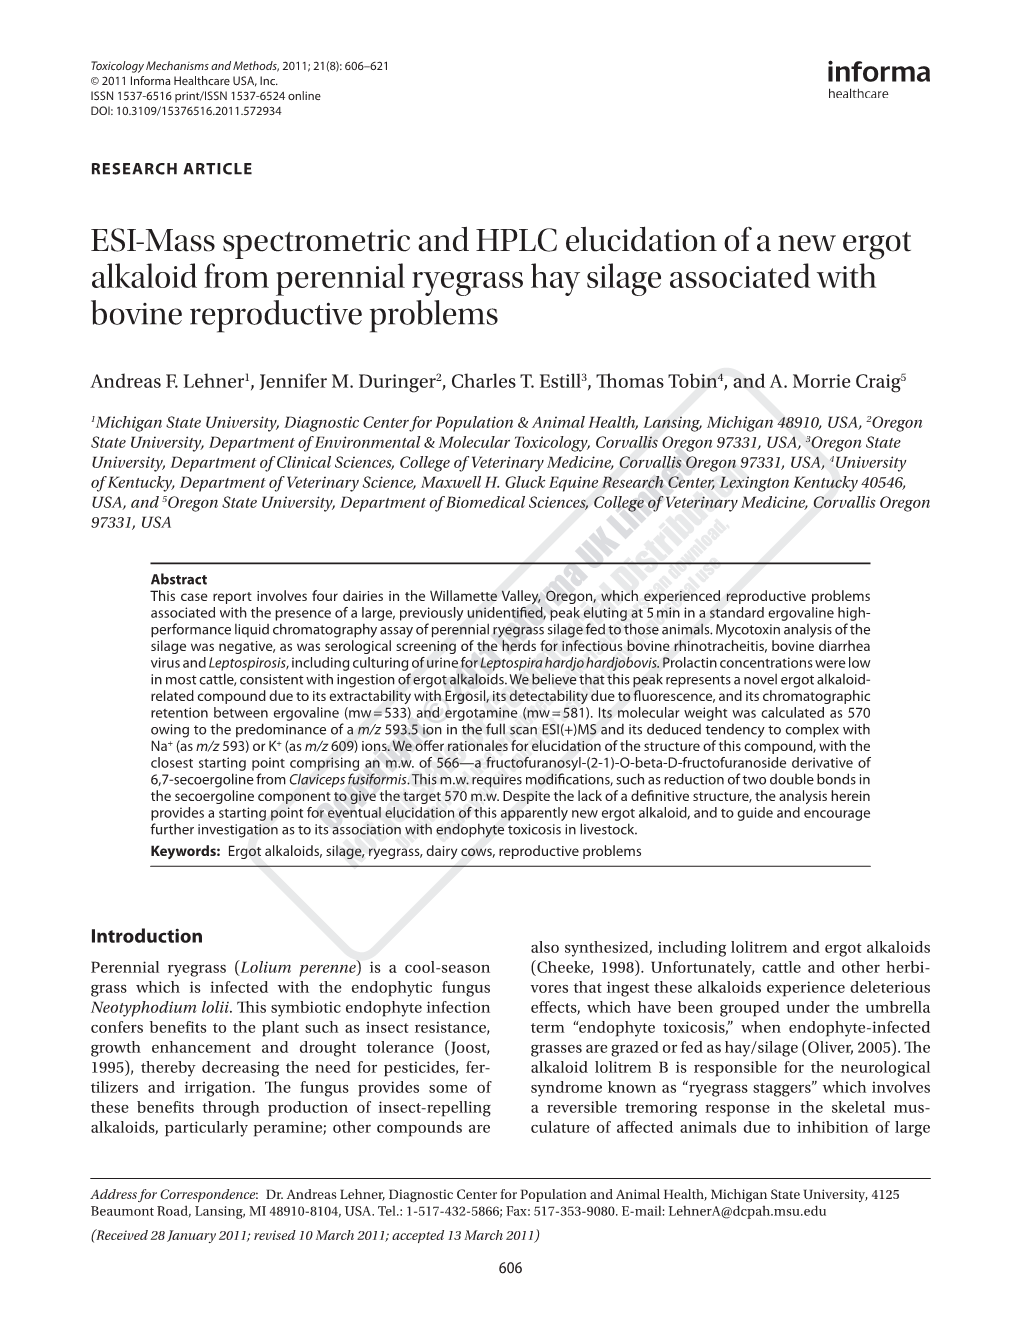 ESI-Mass Spectrometric and HPLC Elucidation of a New Ergot Alkaloid